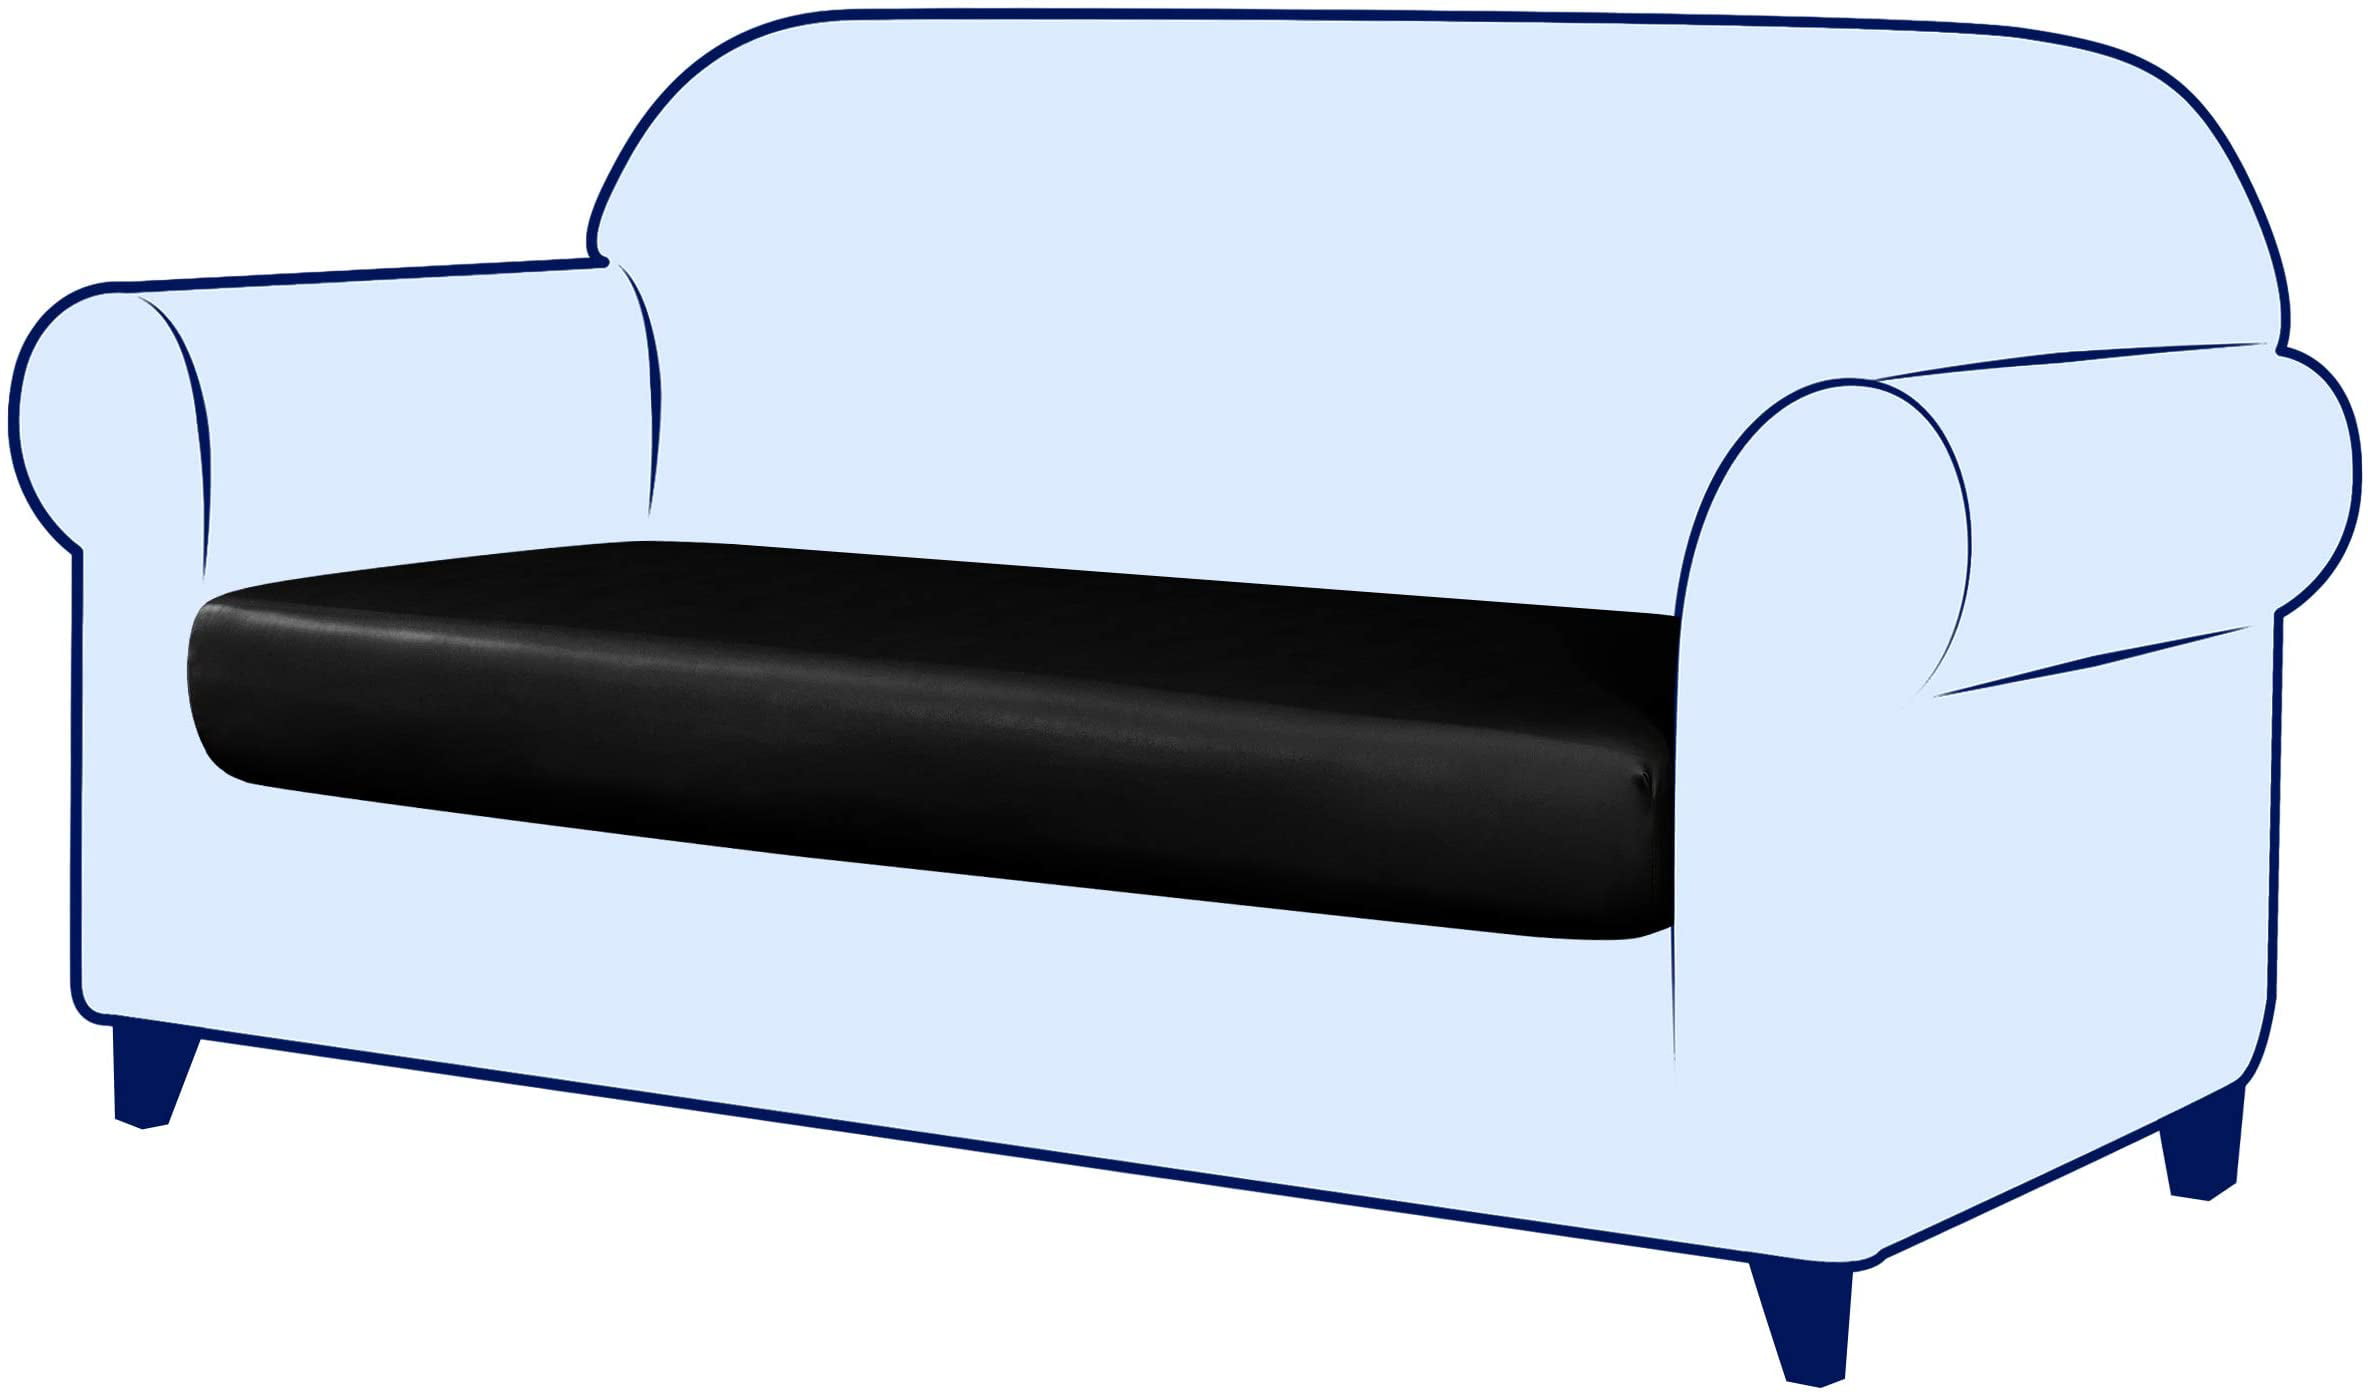 DyFun Couch Cushion Cover PU Leather Sofa Cushion Slipcover Stretch Waterproof Chair Seat Slipcover Furniture Protector Loveseat Cushion, Black